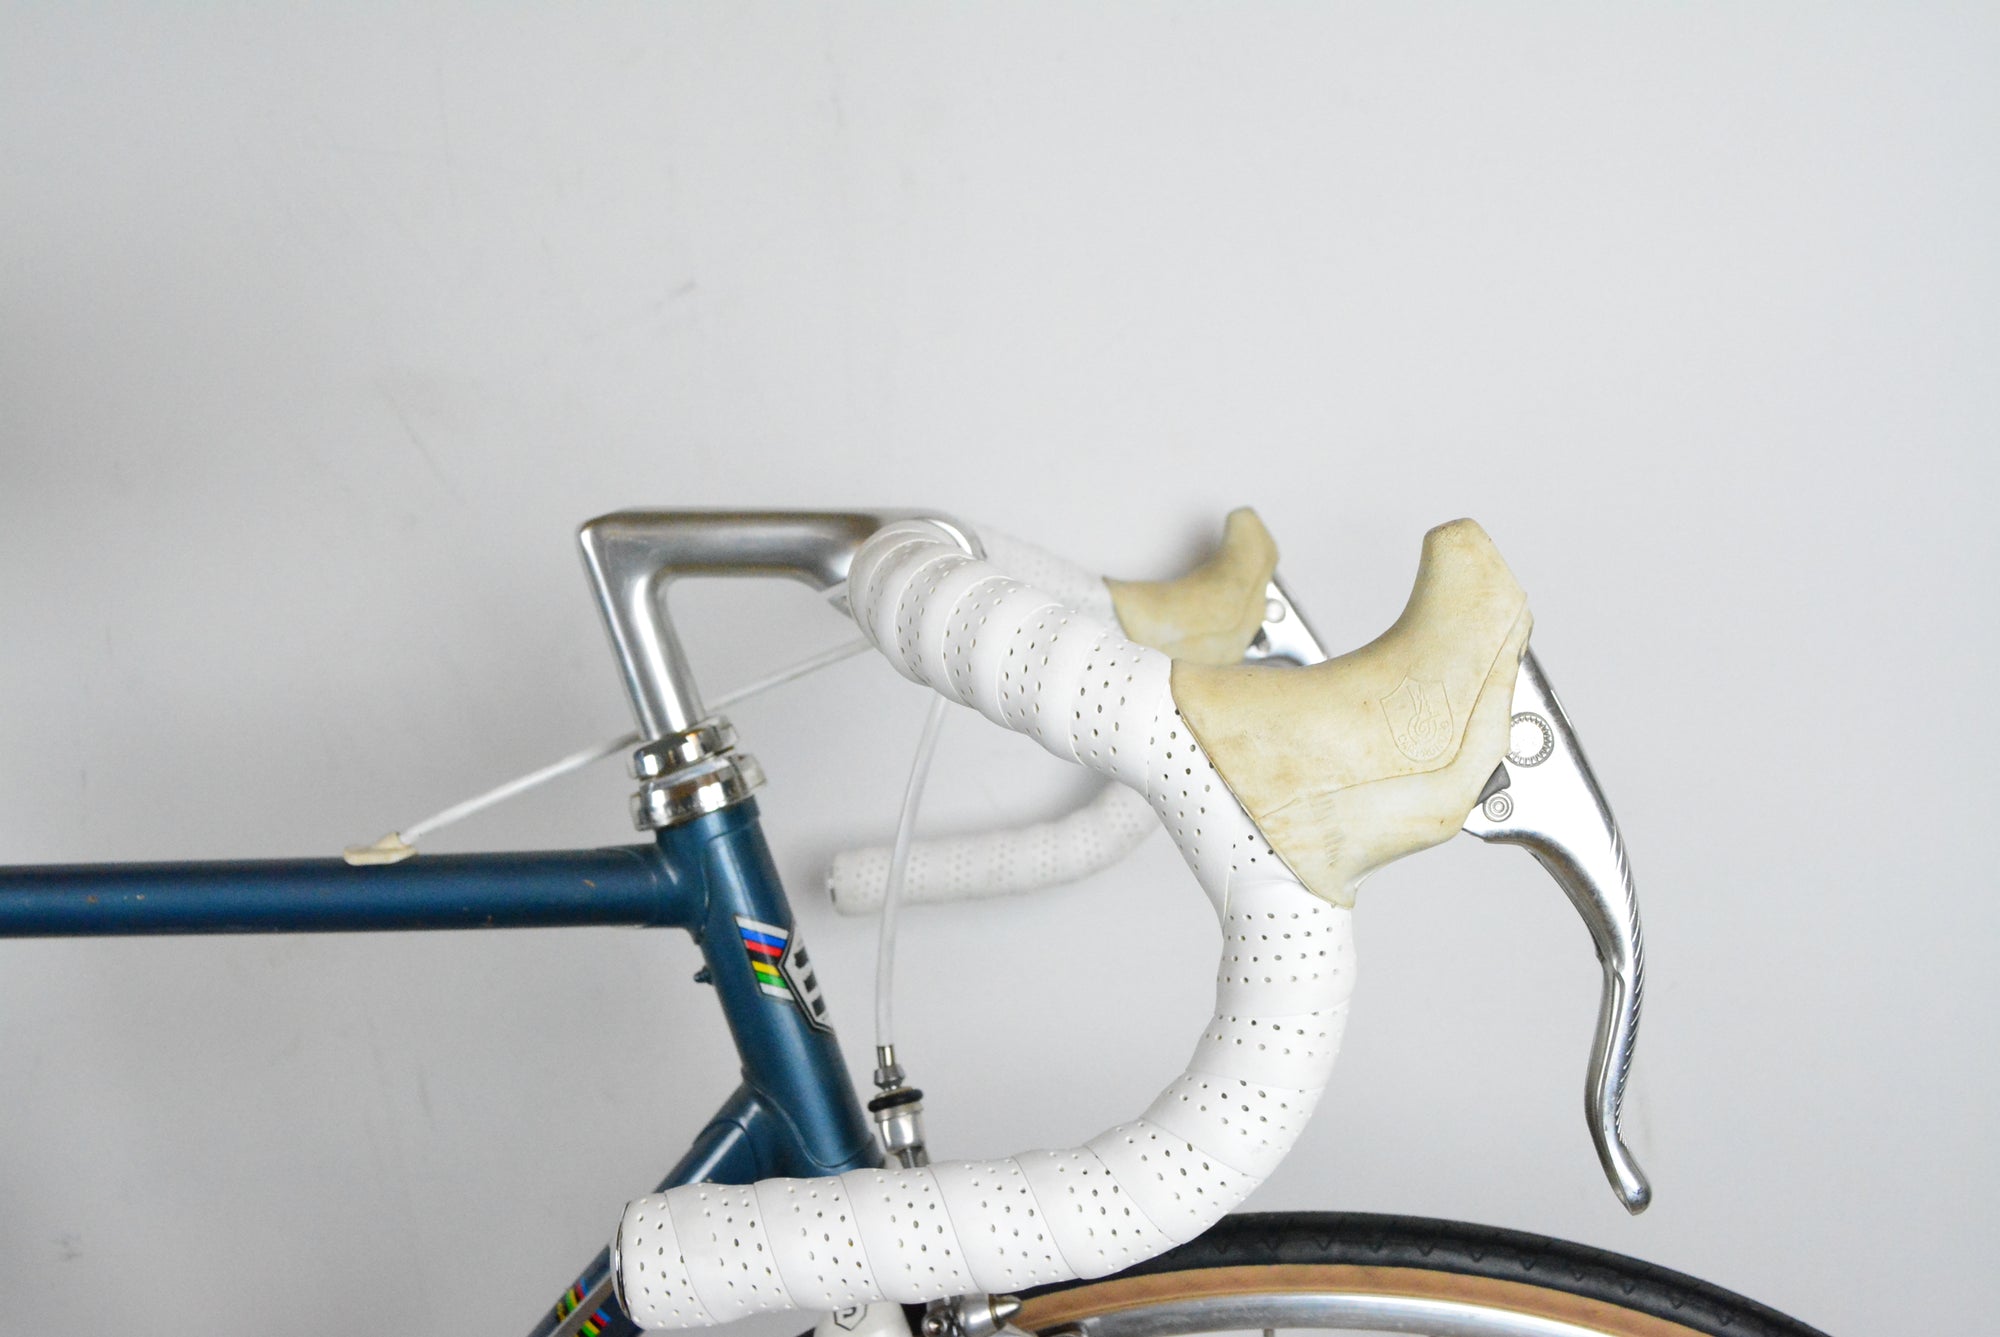 Basso Vintage Rennrad 54cm